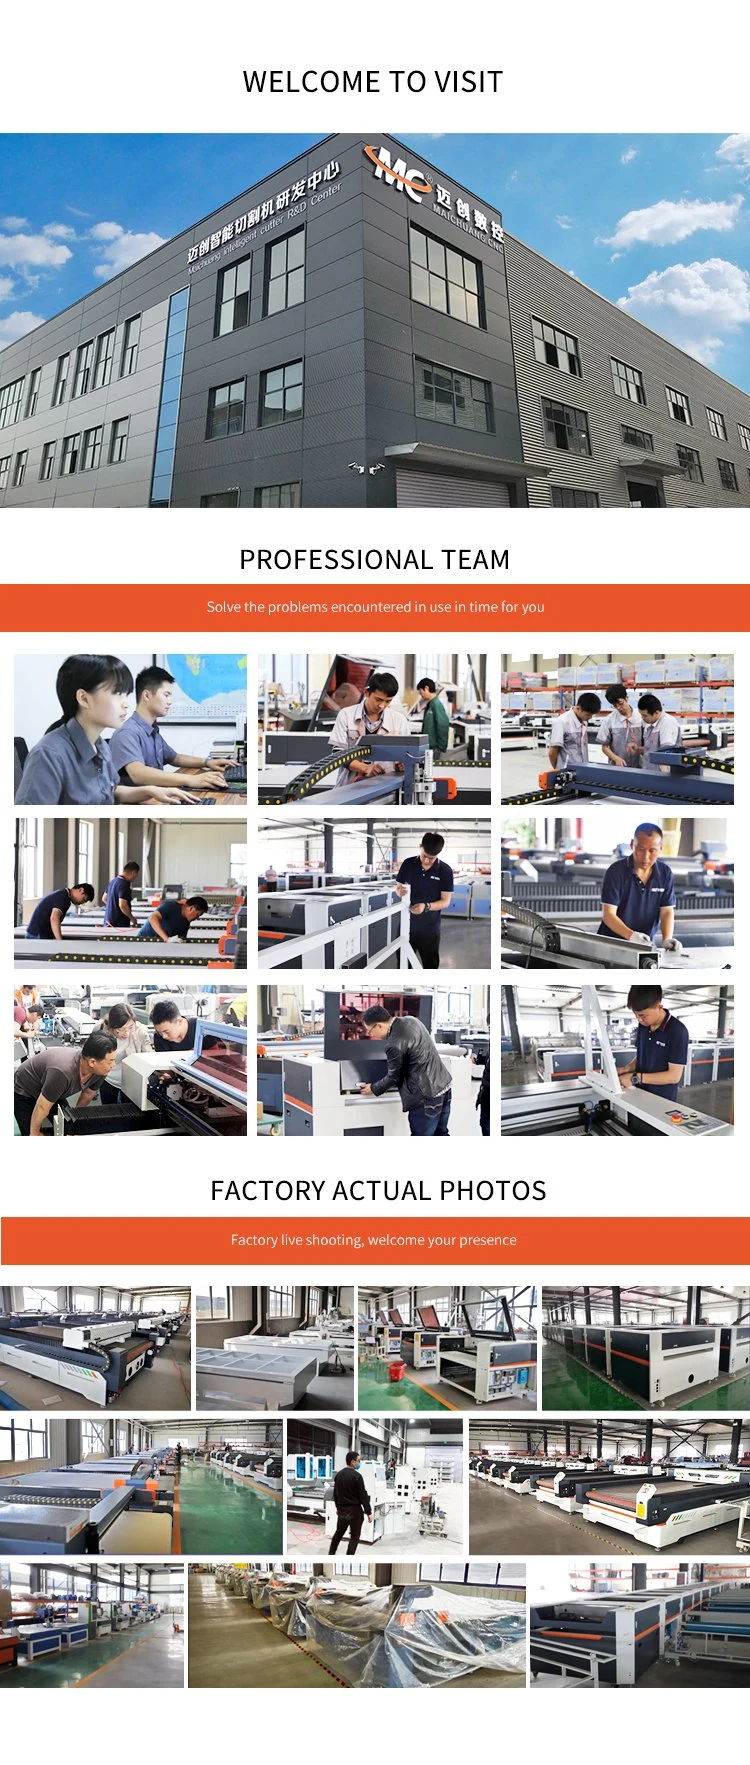 Factory Direct CNC Metal CO2 Laser Cutting Machine 1390